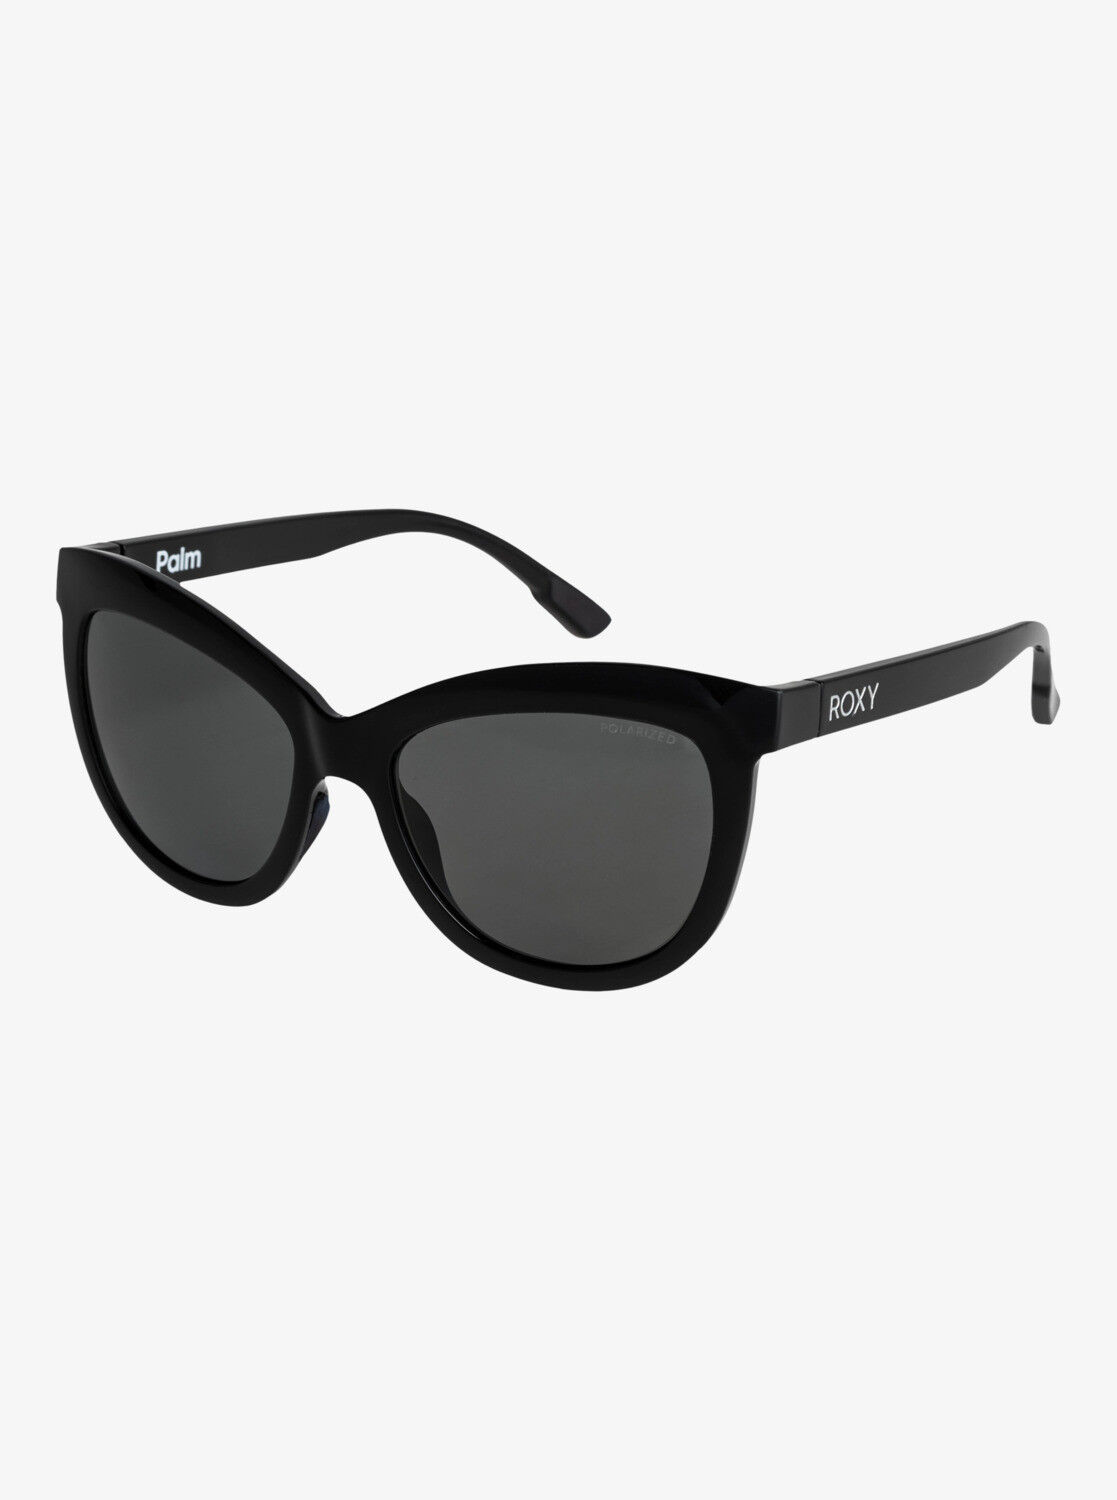 Roxy Palm Polarized - Sunglasses - Women's | Hardloop